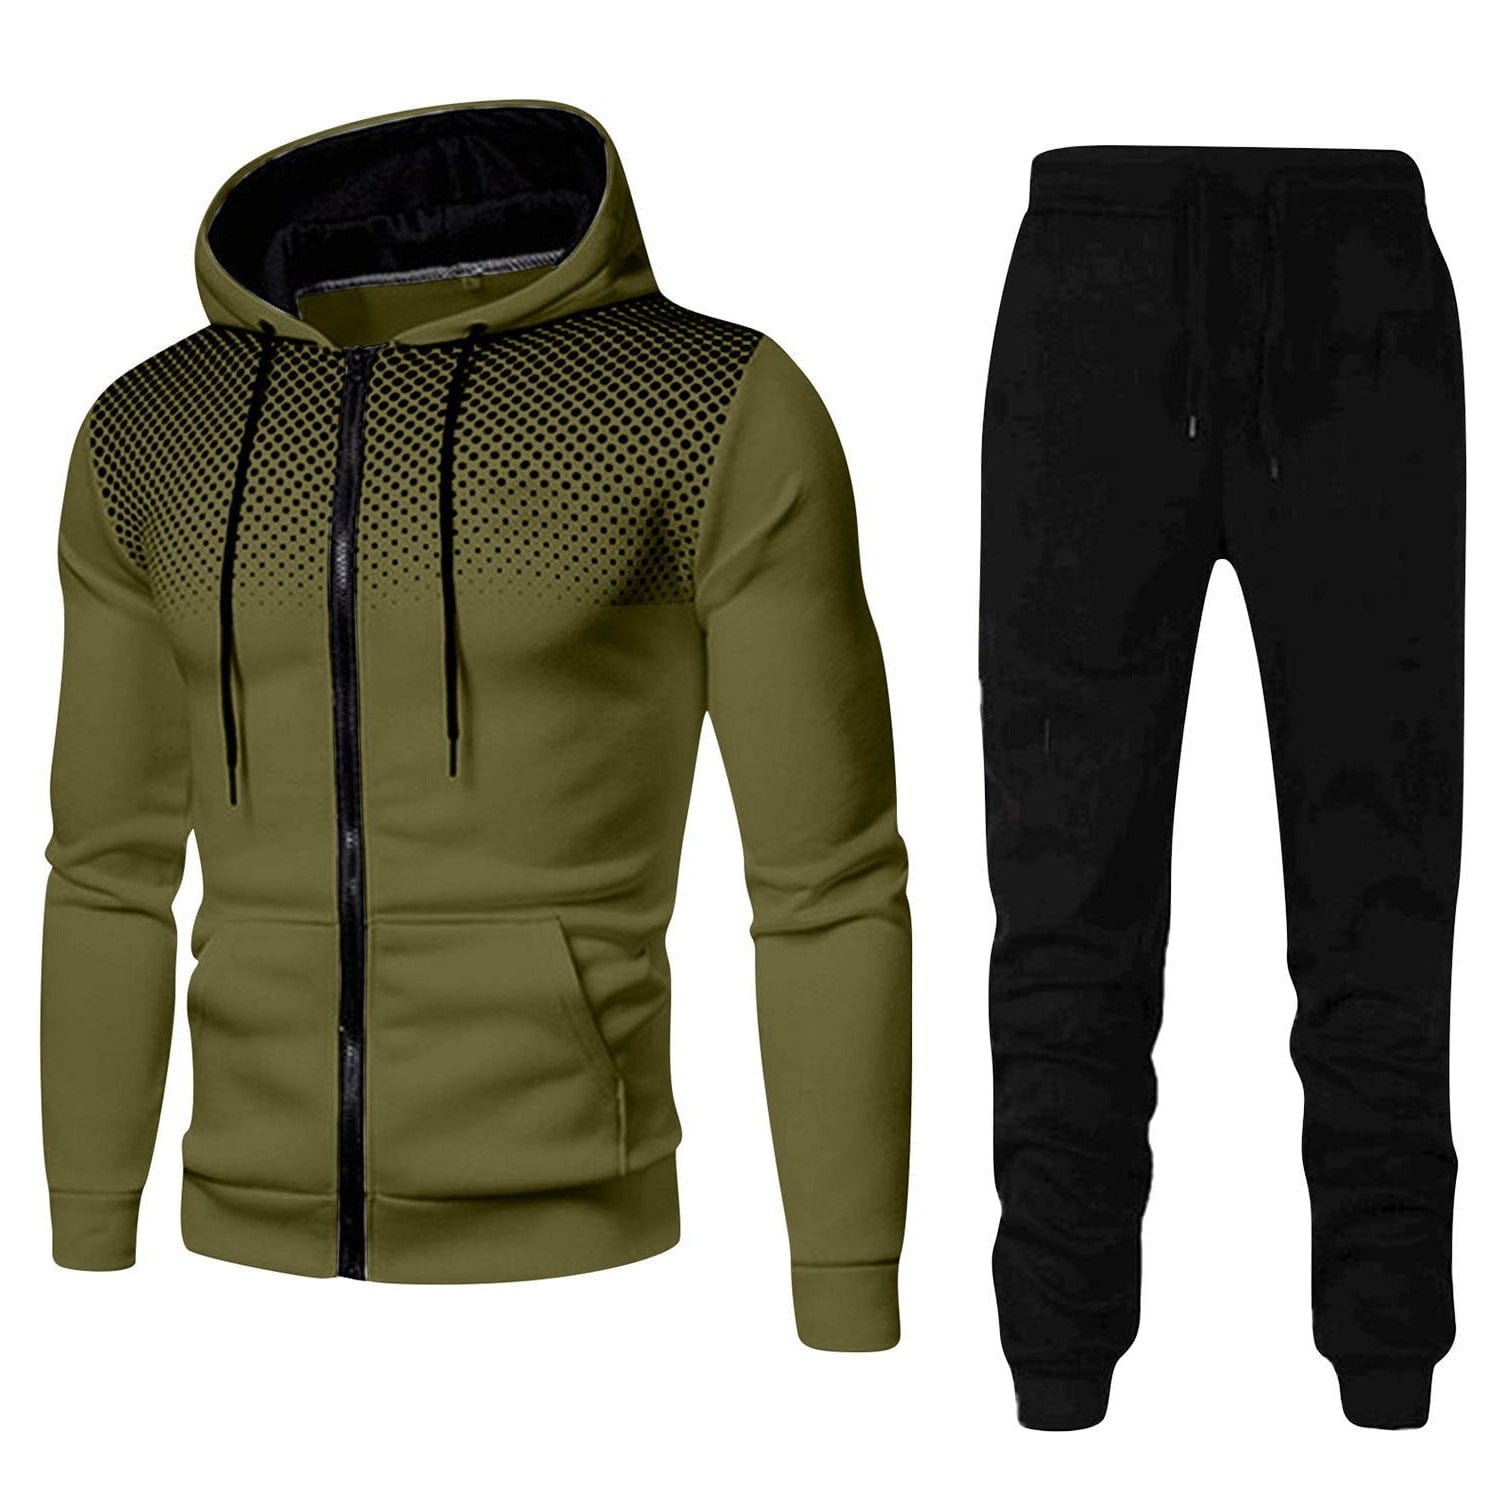 ALLRJ Army Green / 2XL Men's Sports Fitness Casual Zipper Suit